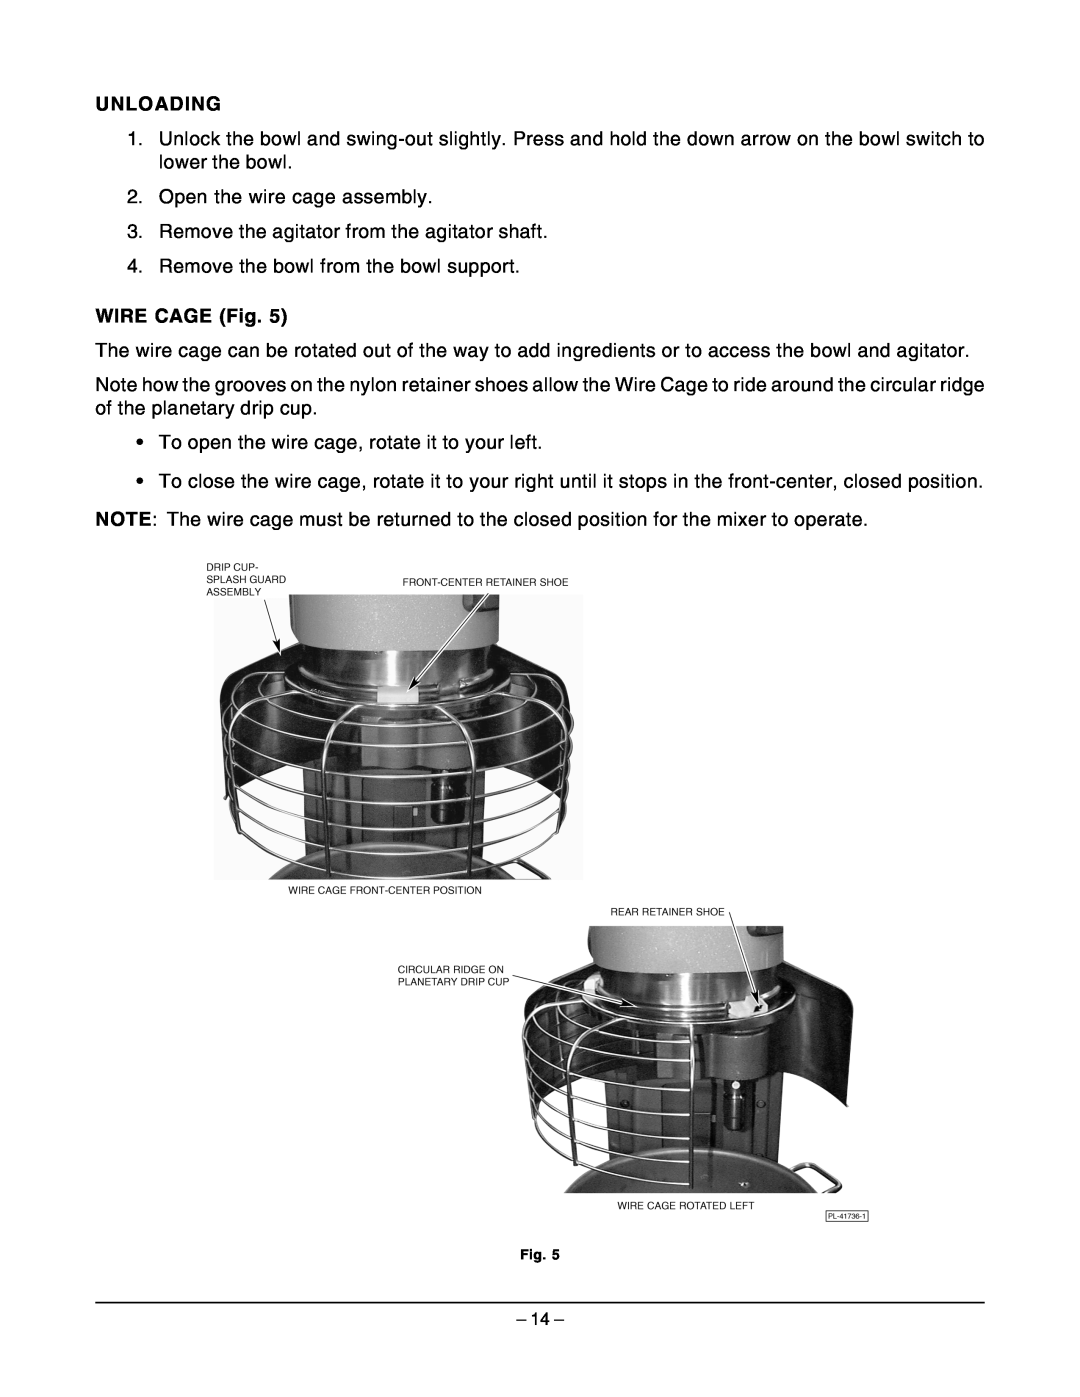 Hobart HL661 instruction manual Unloading, WIRE CAGE Fig 